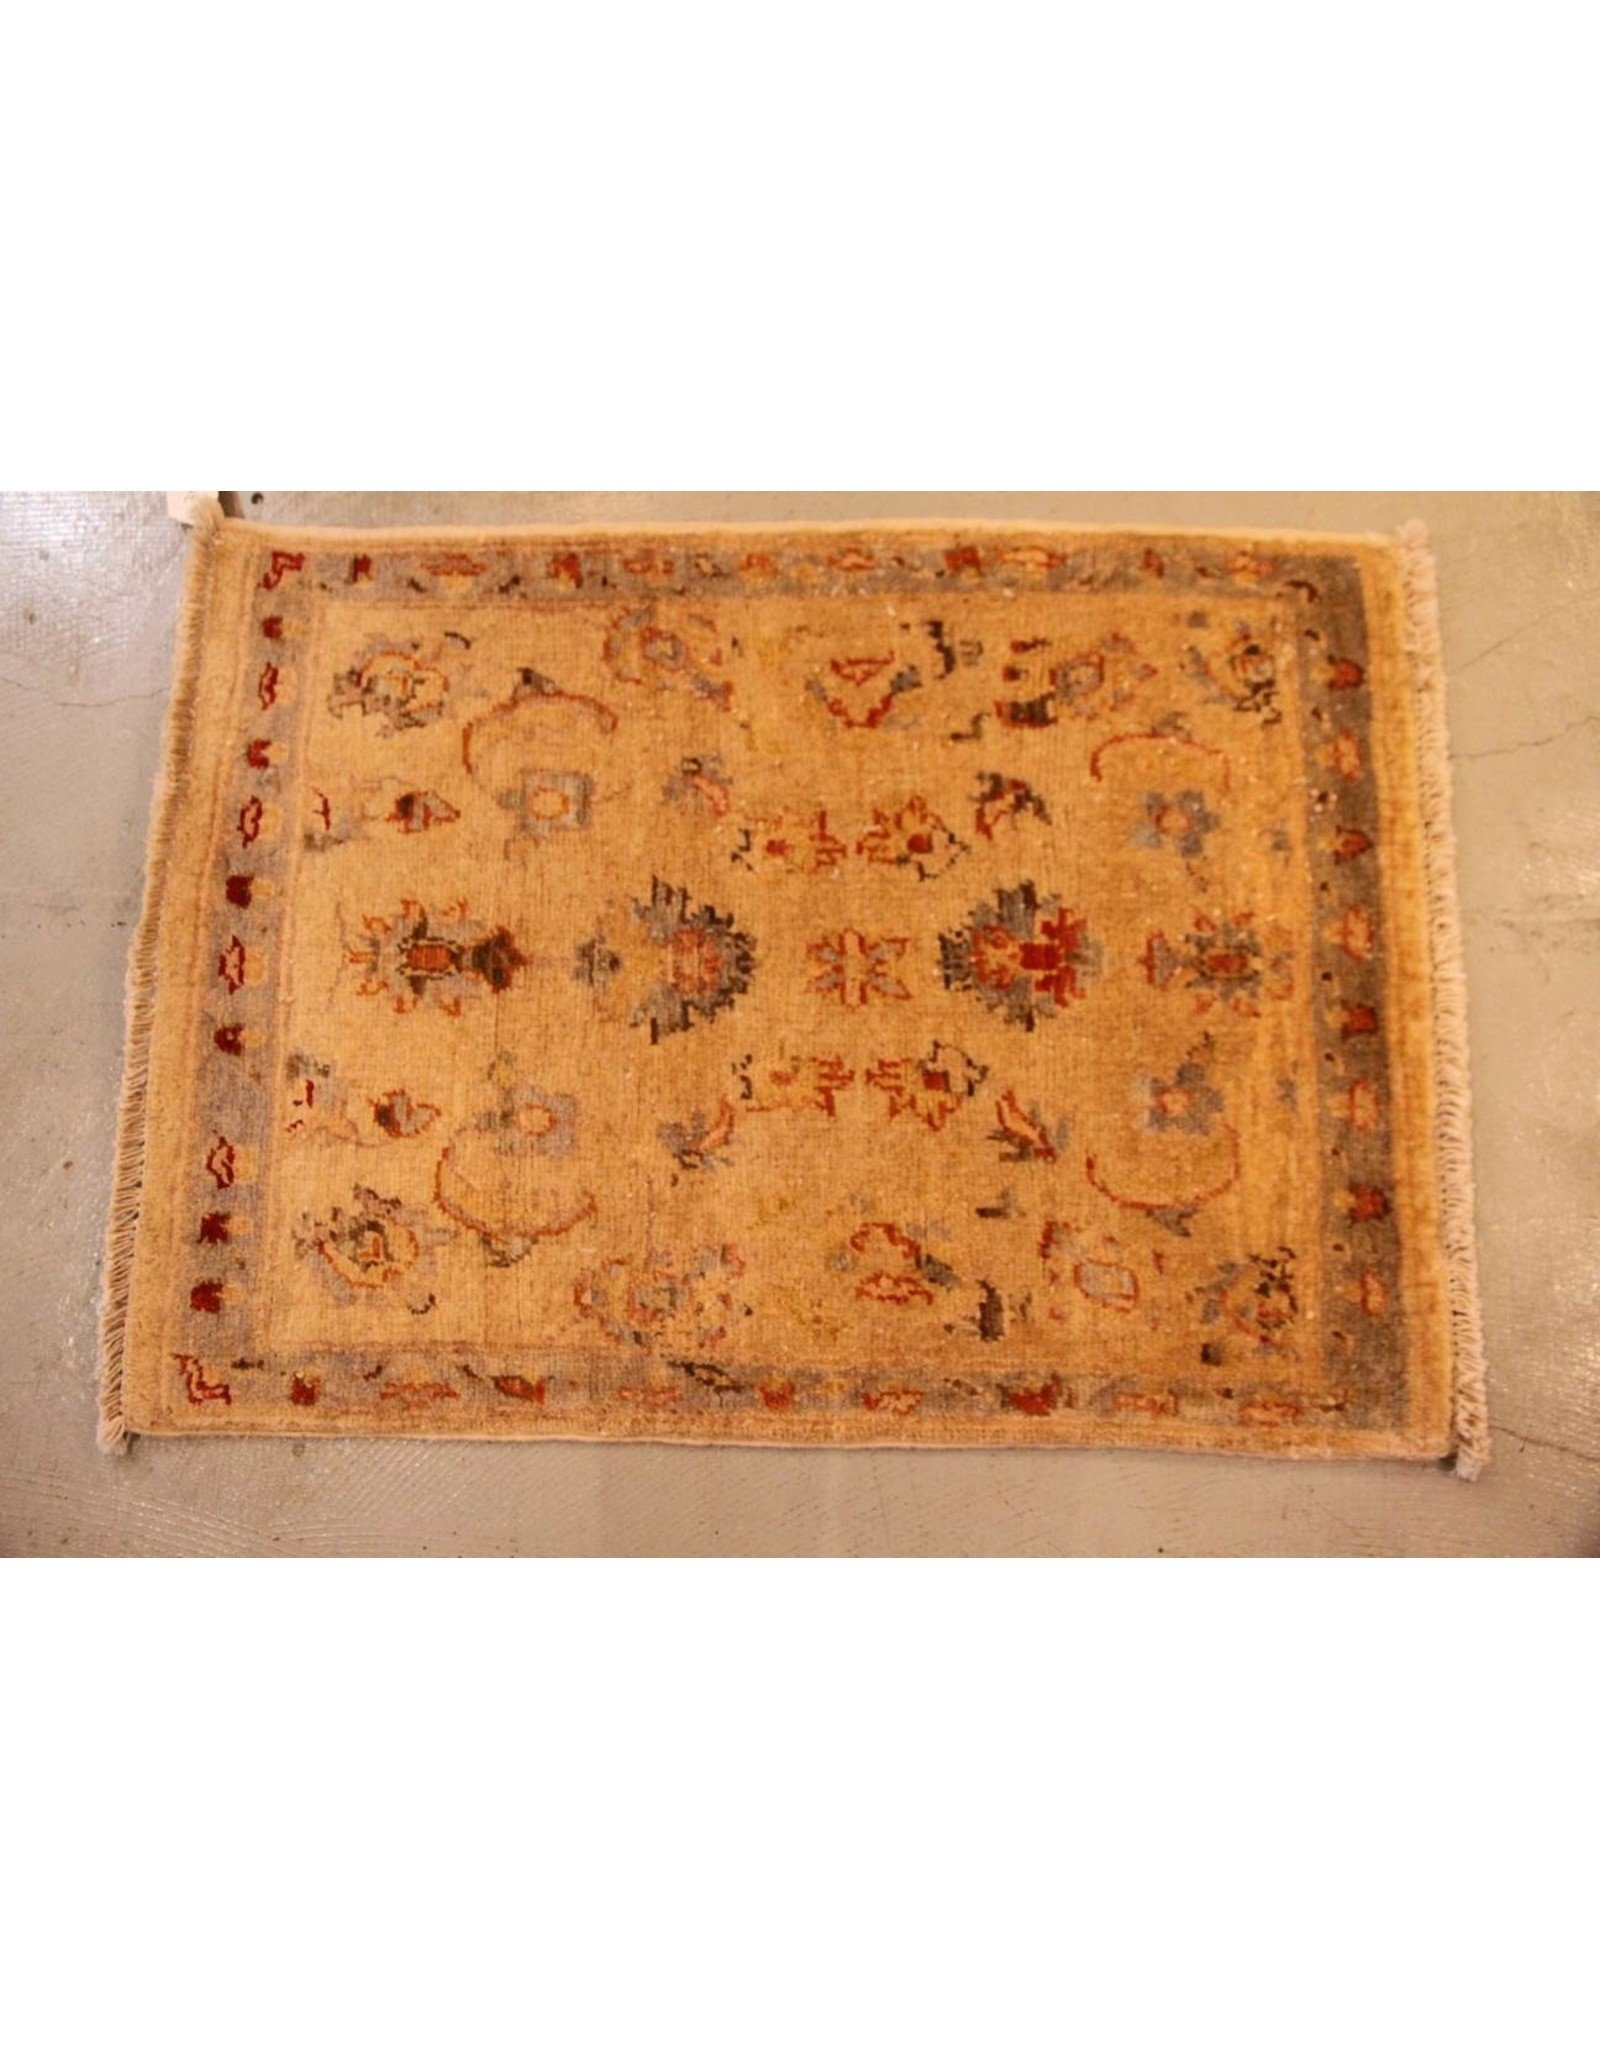 Carpet - 2'2" x 3', wool, Persian, light blue and beige